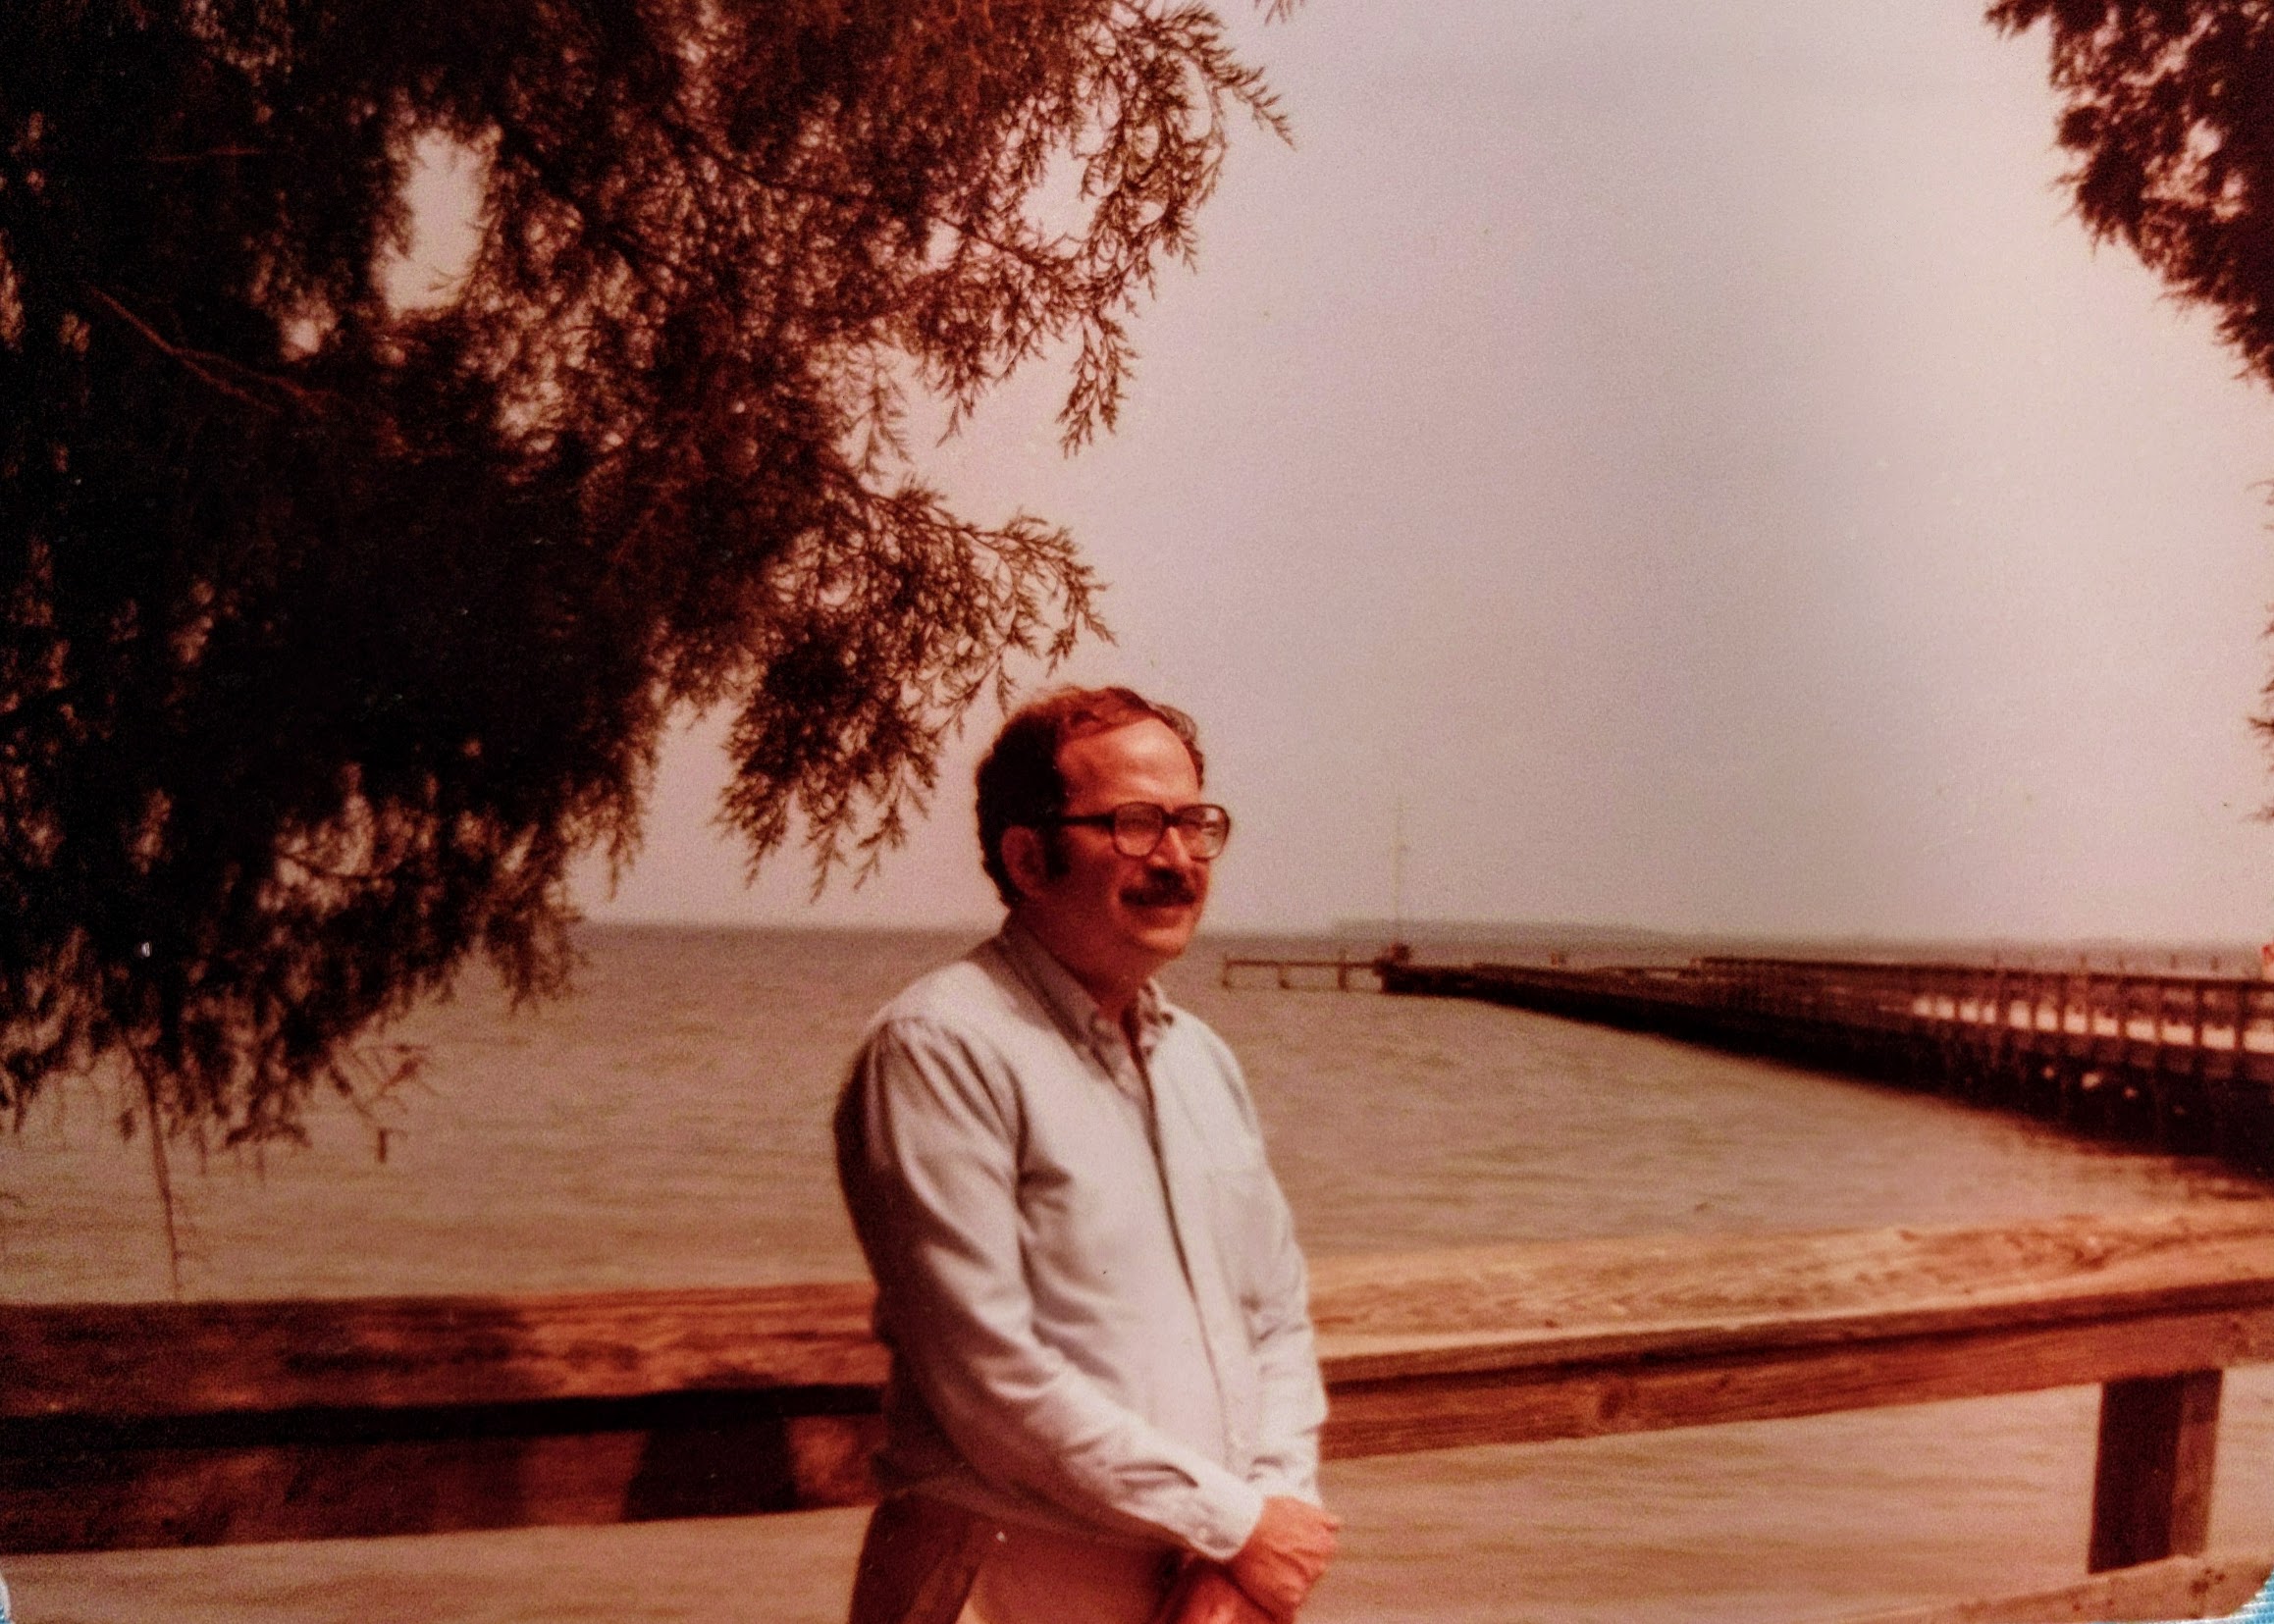 Ted Greenfeld circa 1980s at the Chesapeake Bay